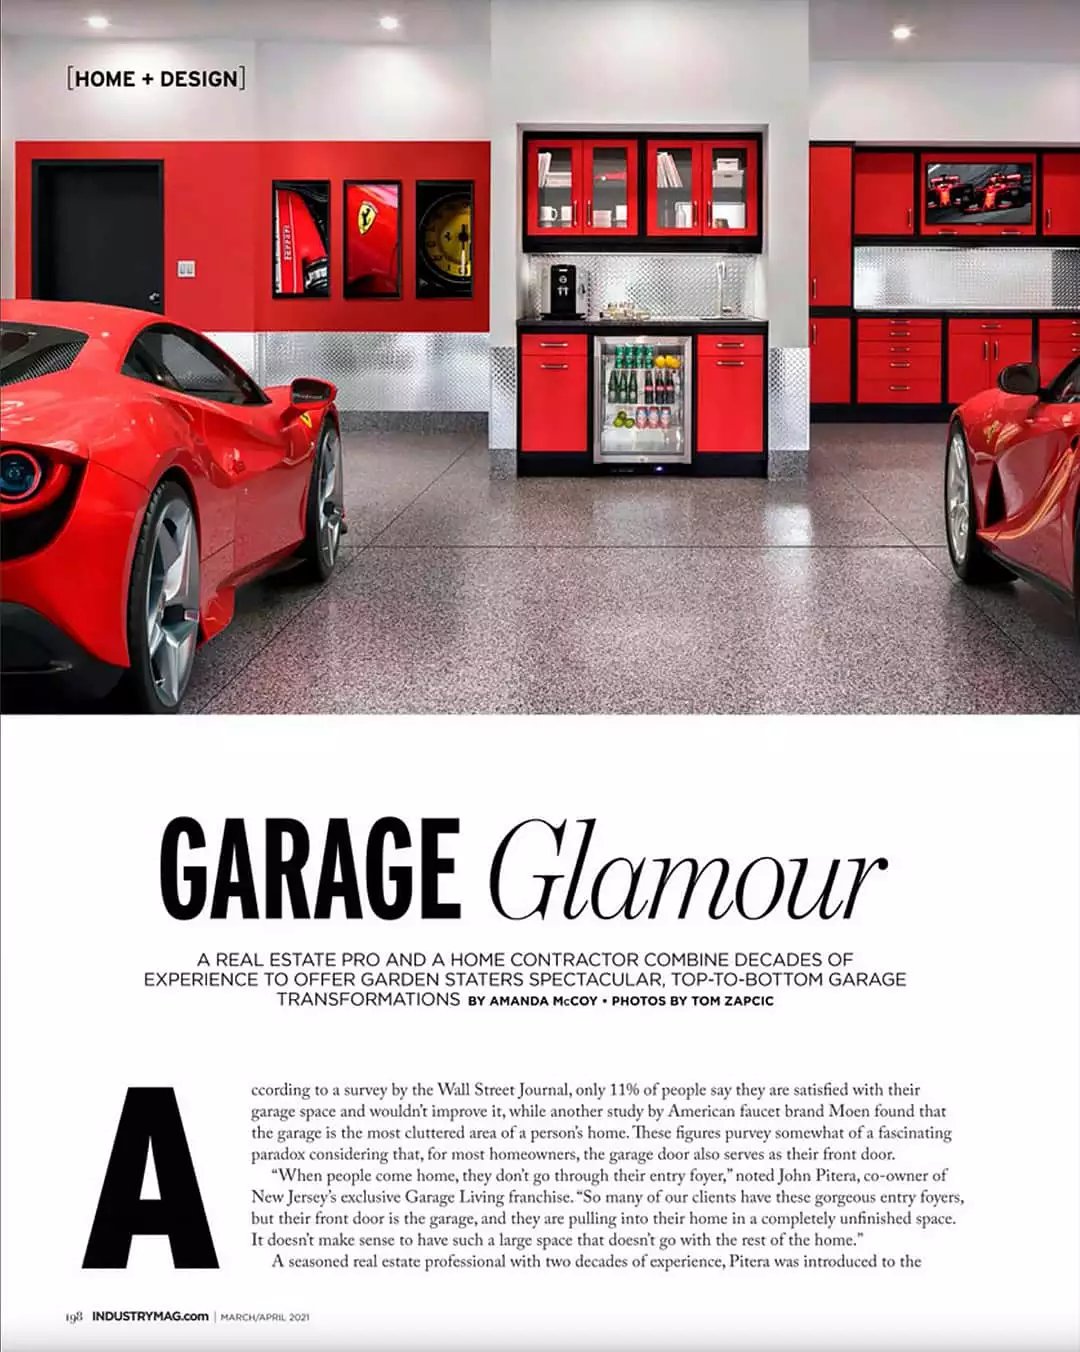 xindustry-nj-magazine-garage-glamour.jpg.pagespeed.ic.R2Ra4iGDfn